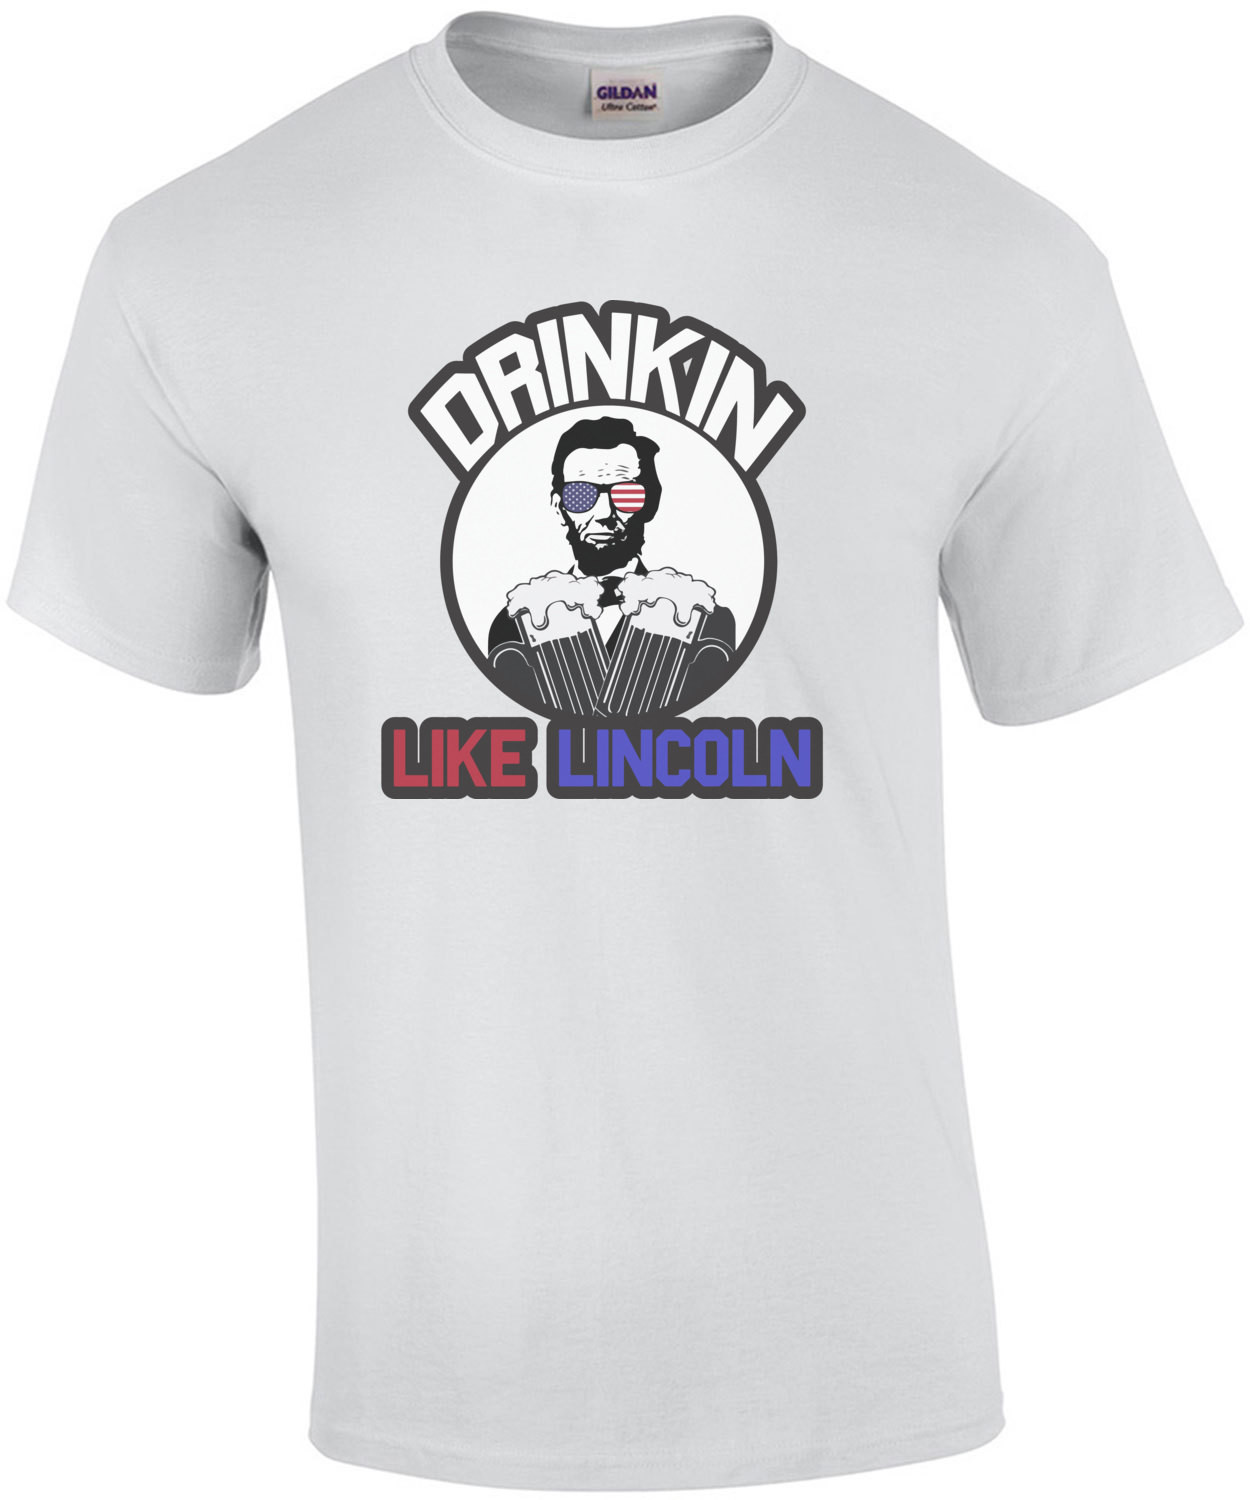 Drinkin Like Lincoln - Funny Drinking T-Shirt